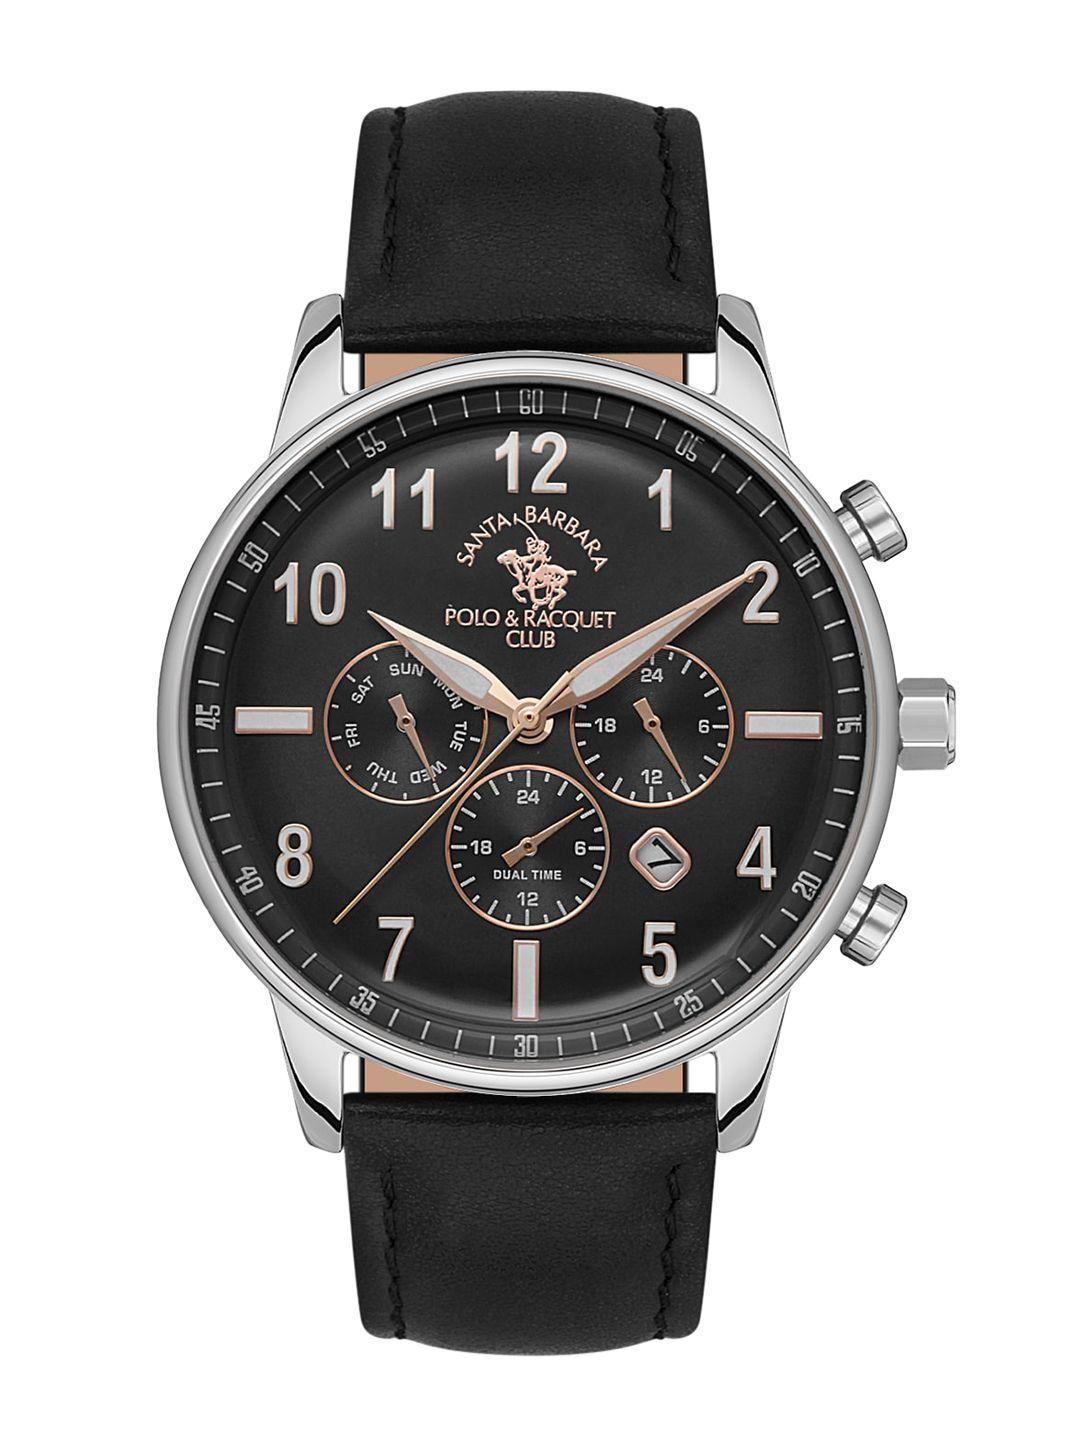 santa barbara polo & racquet club men black dial & black analogue watch sb 1 10439-2